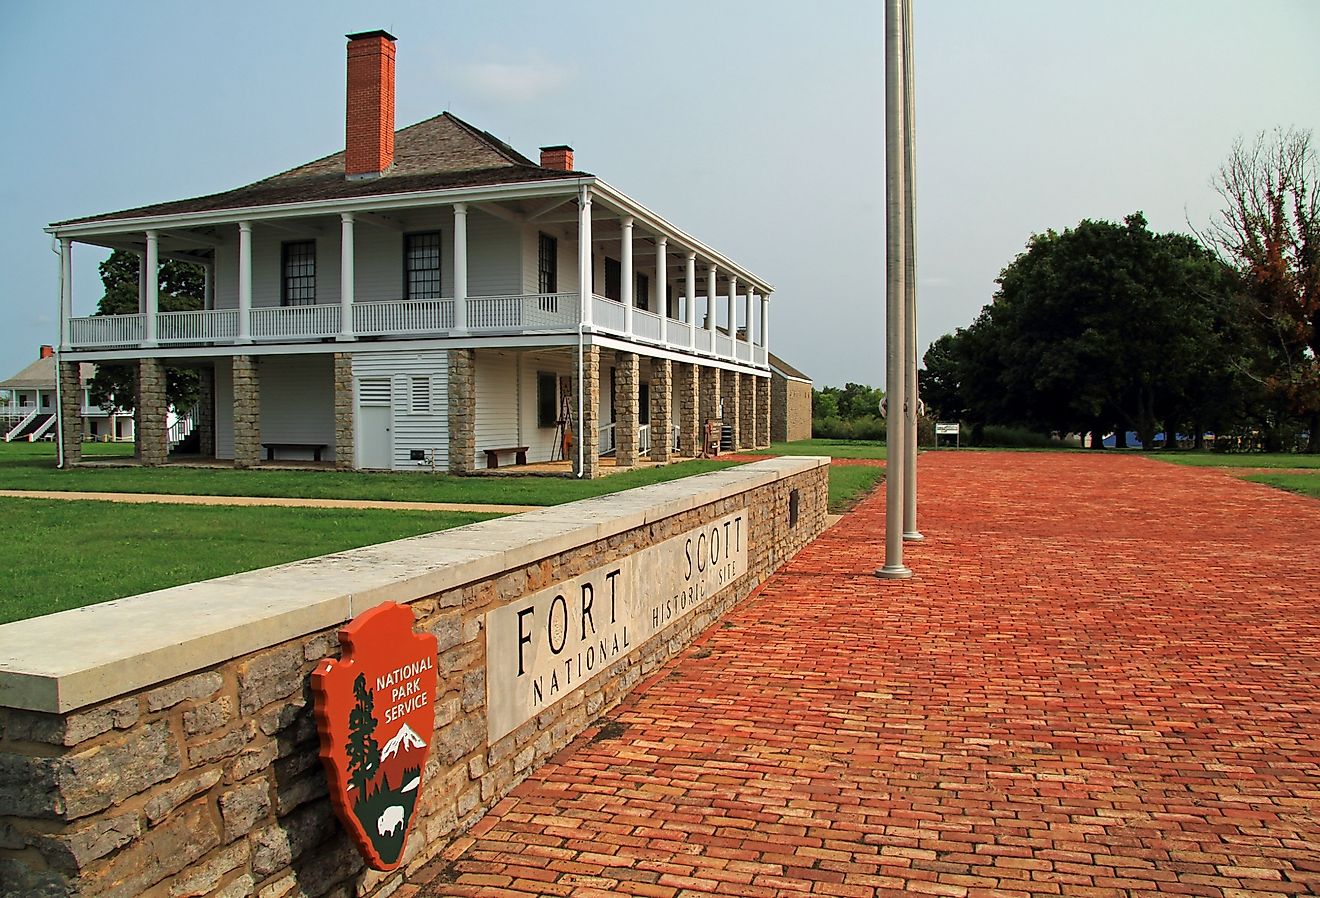 View of Fort Scott building in Fort Scott, Kansas. Image credit William Silver via Shutterstock.